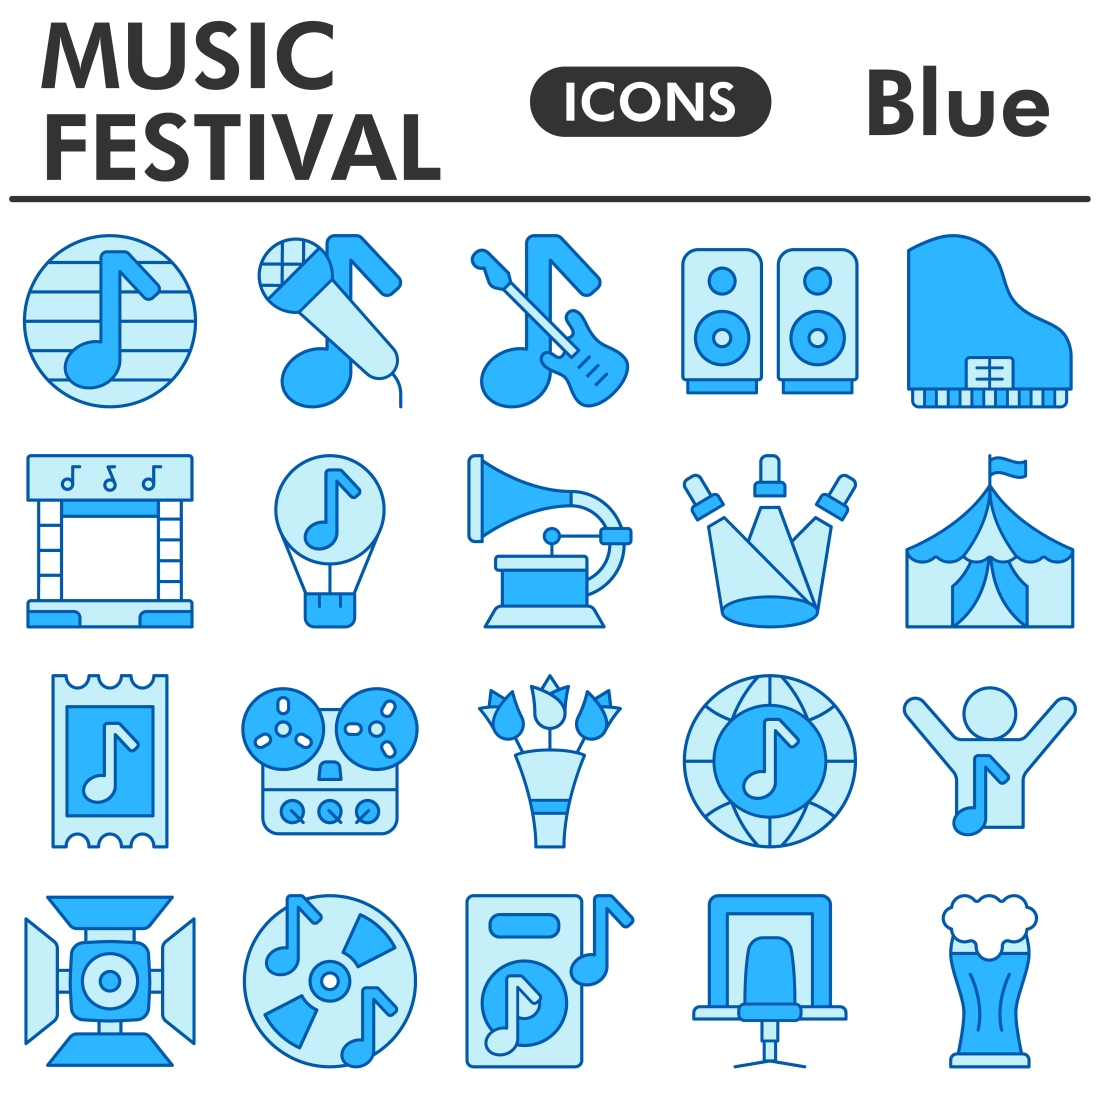 Muzic festival icons set, blue style preview image.